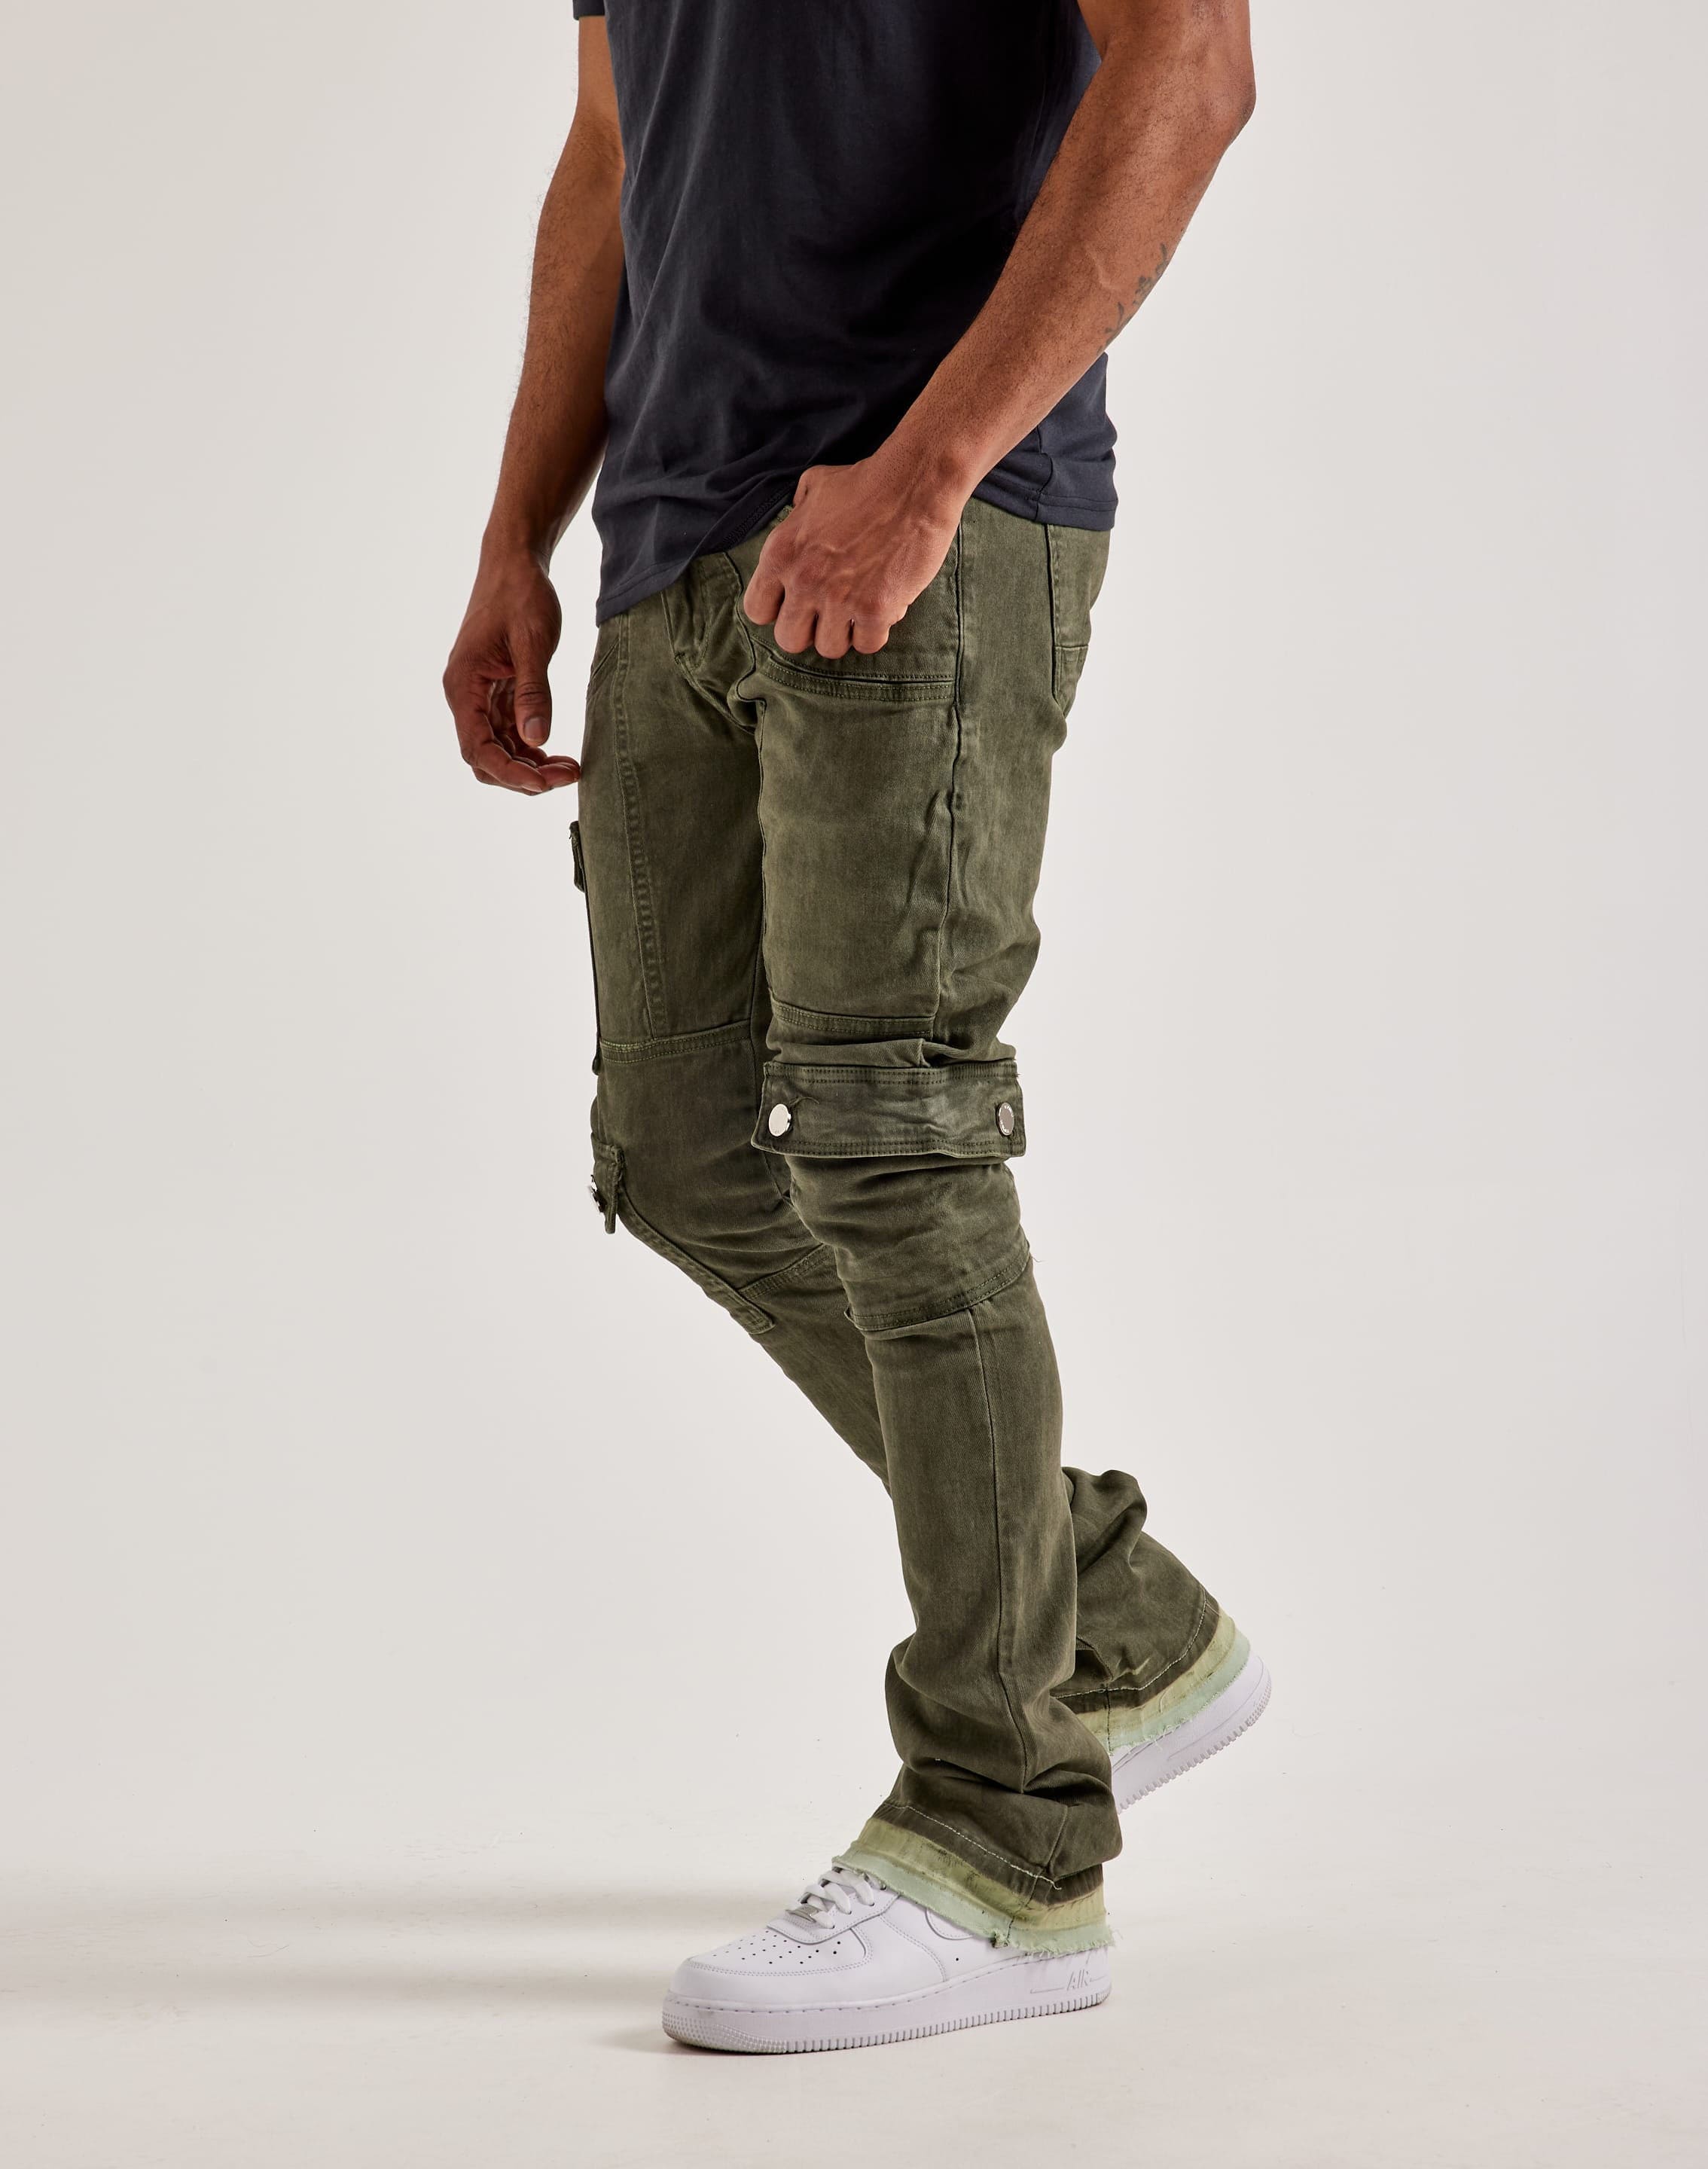 Cargo Pant For Men's Activewear RZIST Capulet Olive Cargo Pant